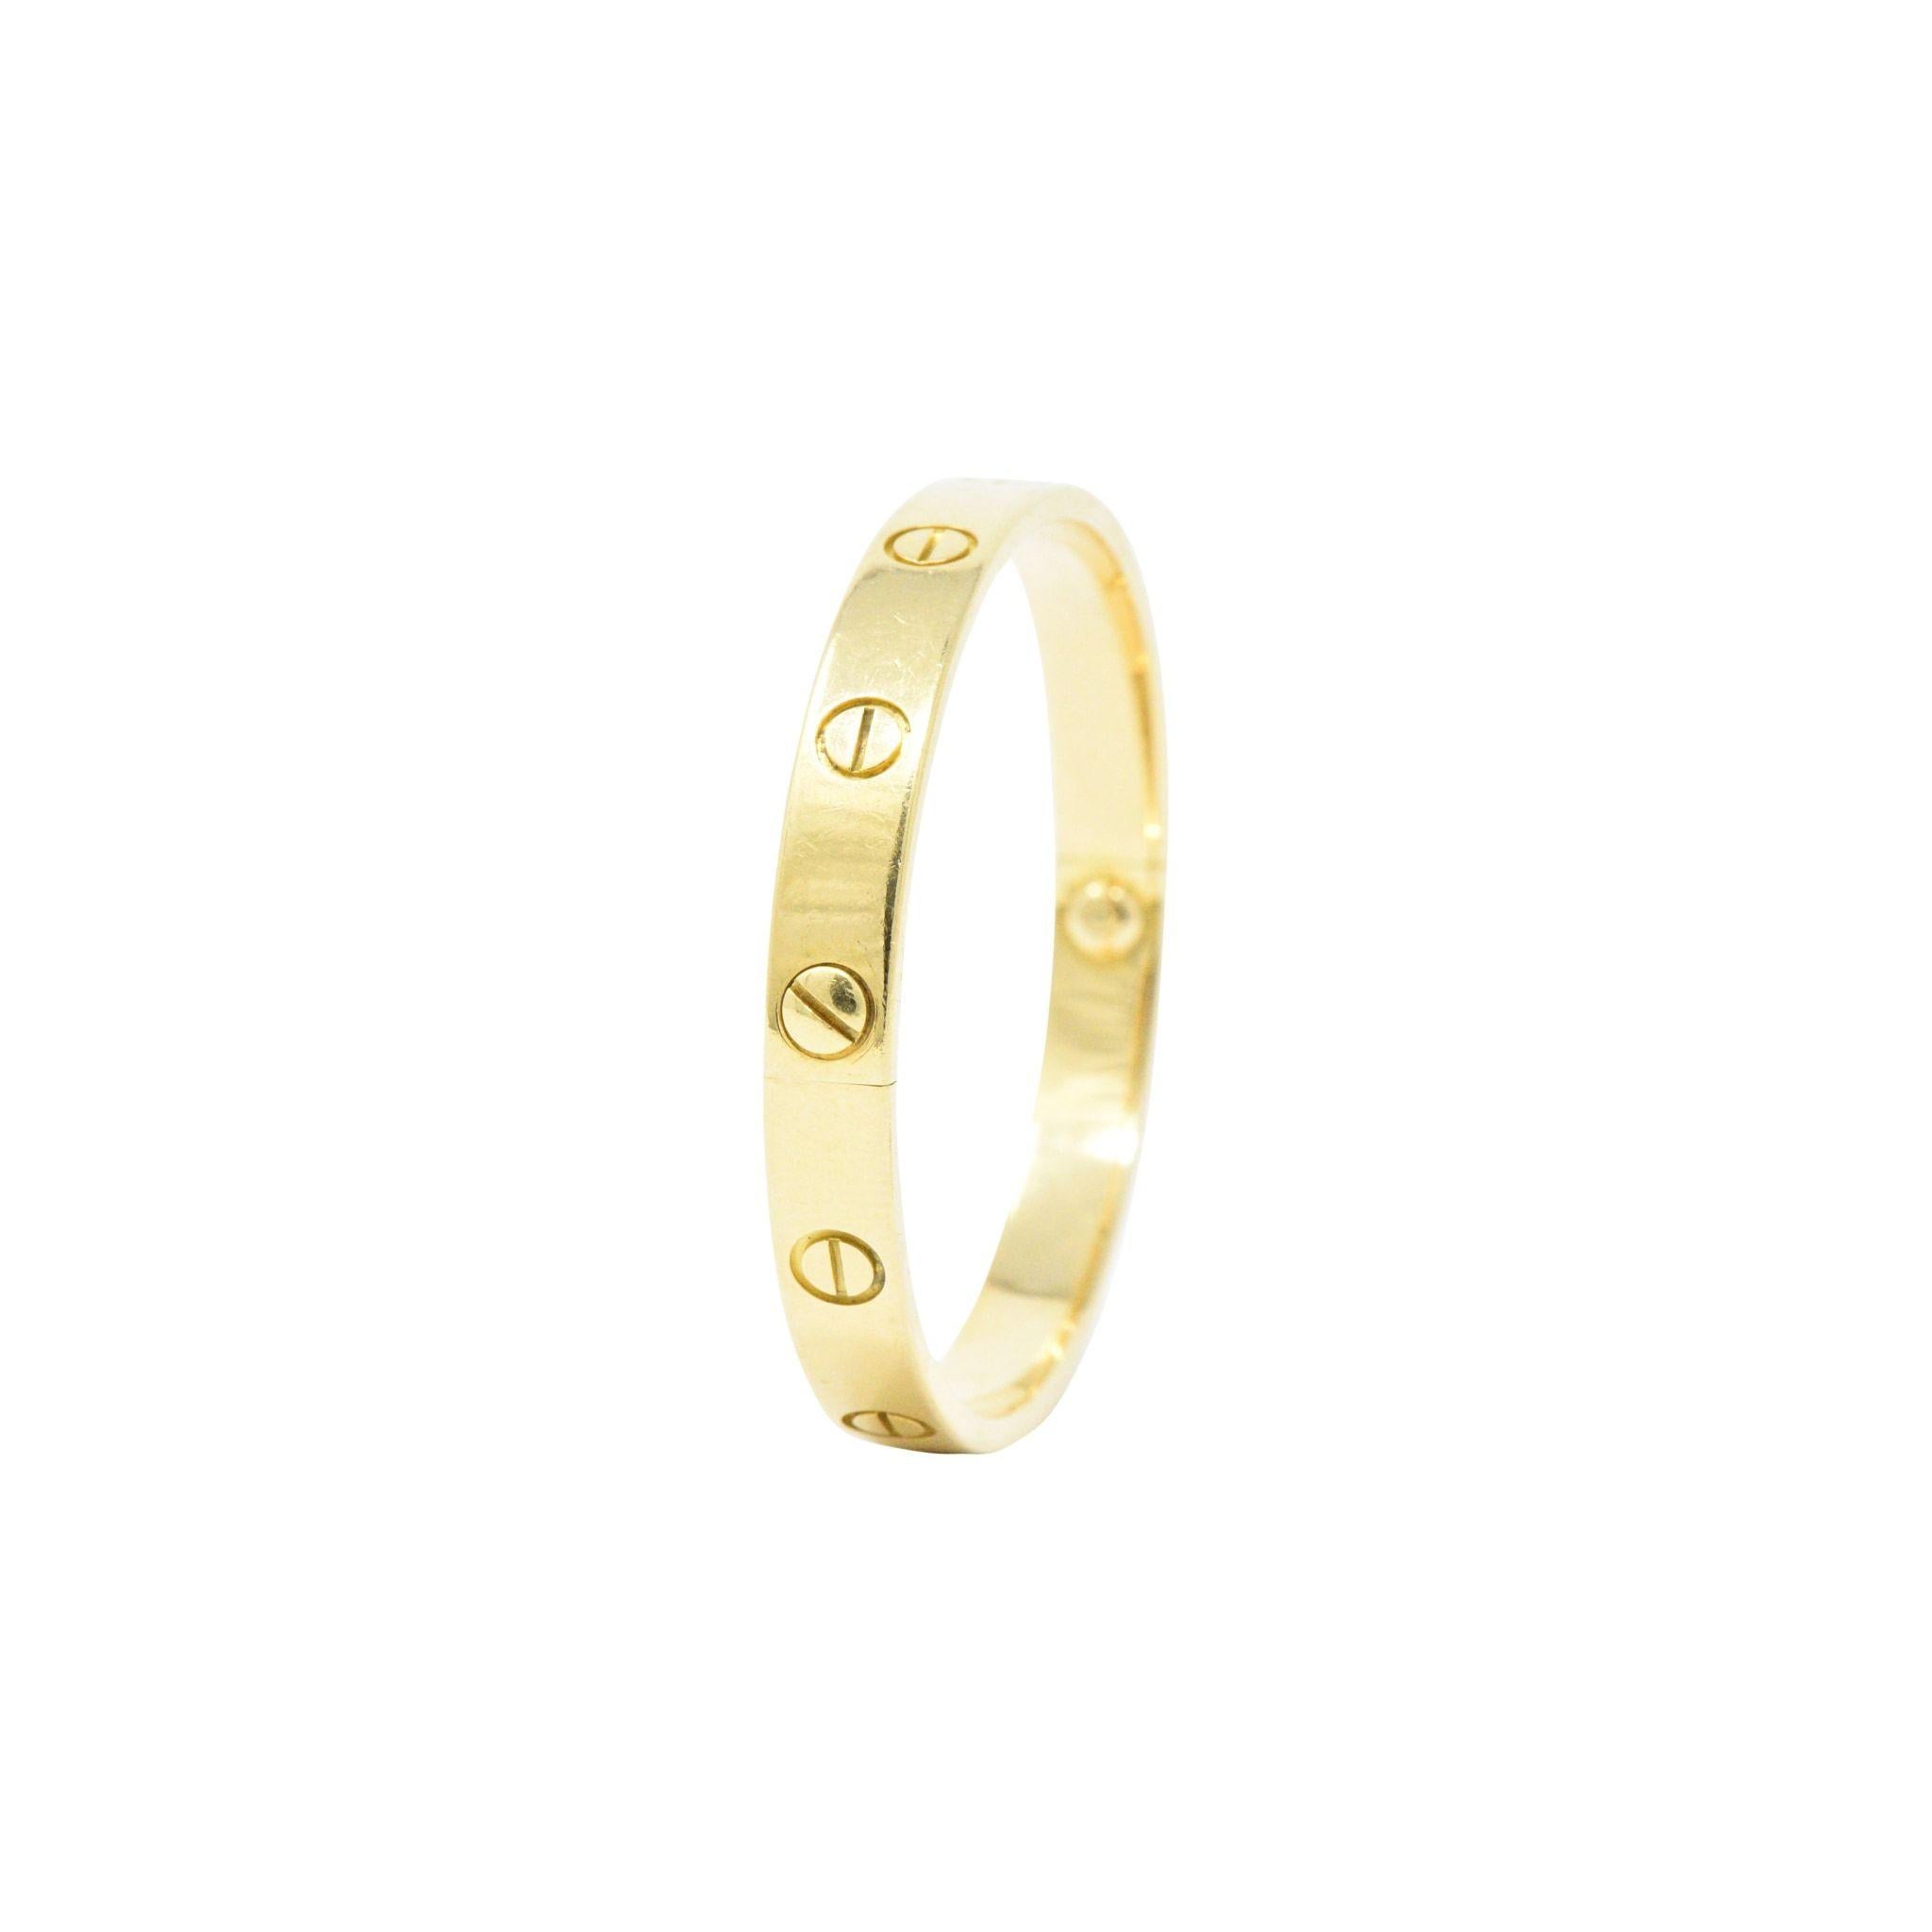 Modern Vintage Cartier 18 Karat Yellow Gold “LOVE” Bangle Bracelet